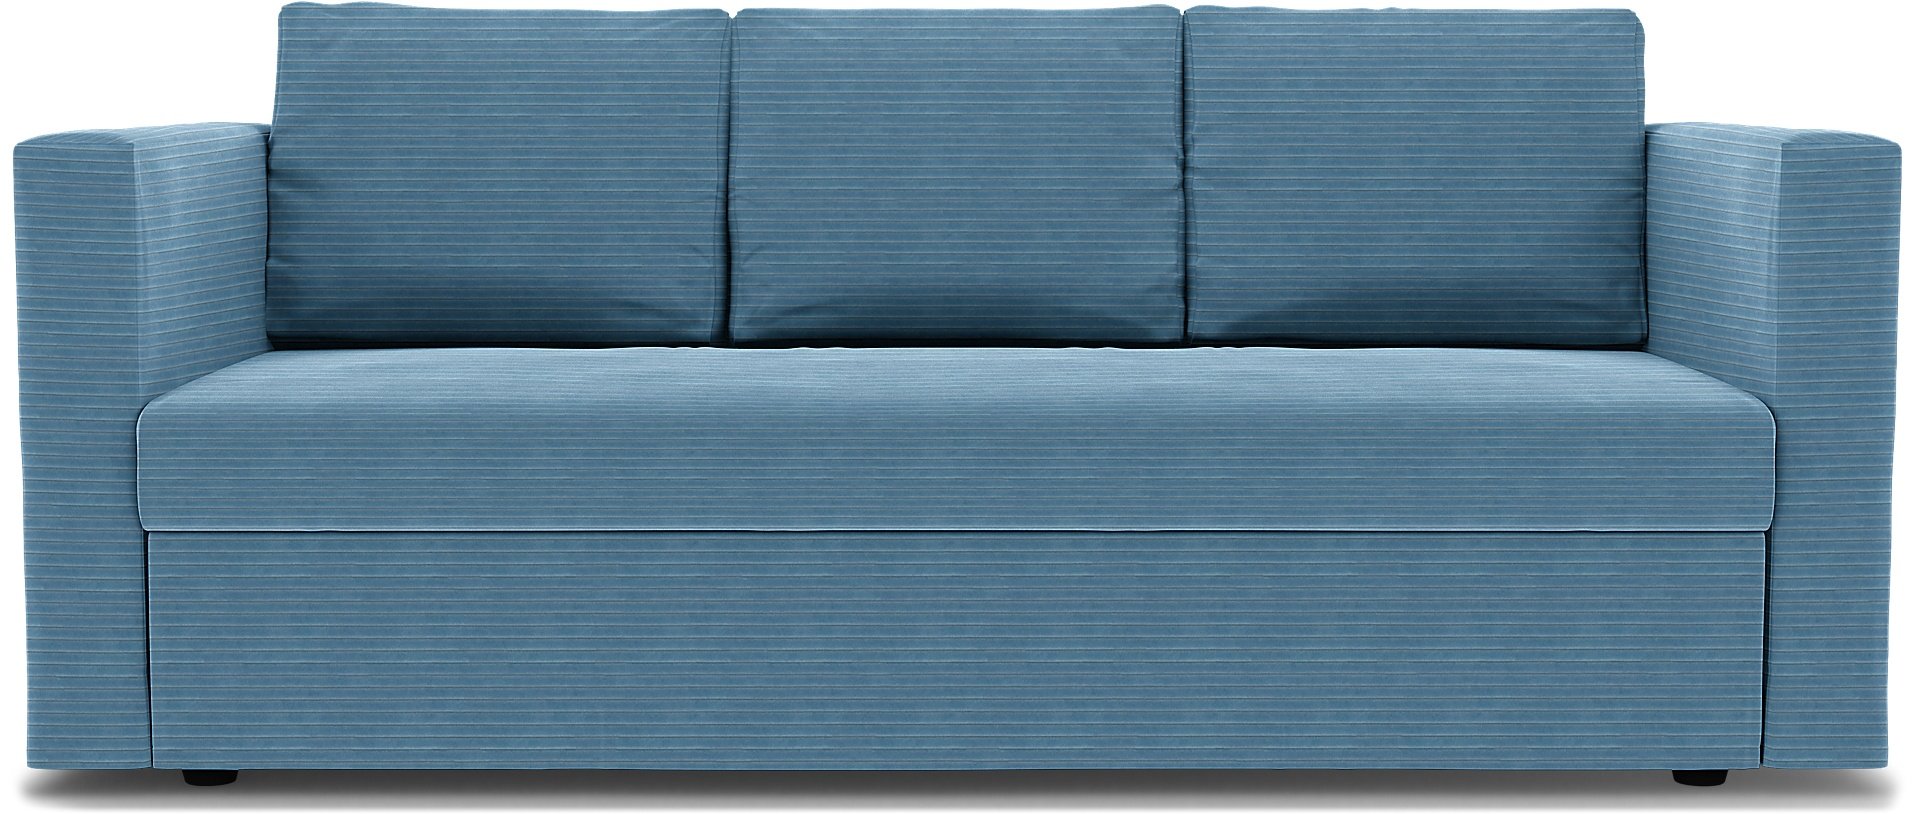 IKEA - Friheten 3 Seater Sofa Bed Cover, Sky Blue, Corduroy - Bemz